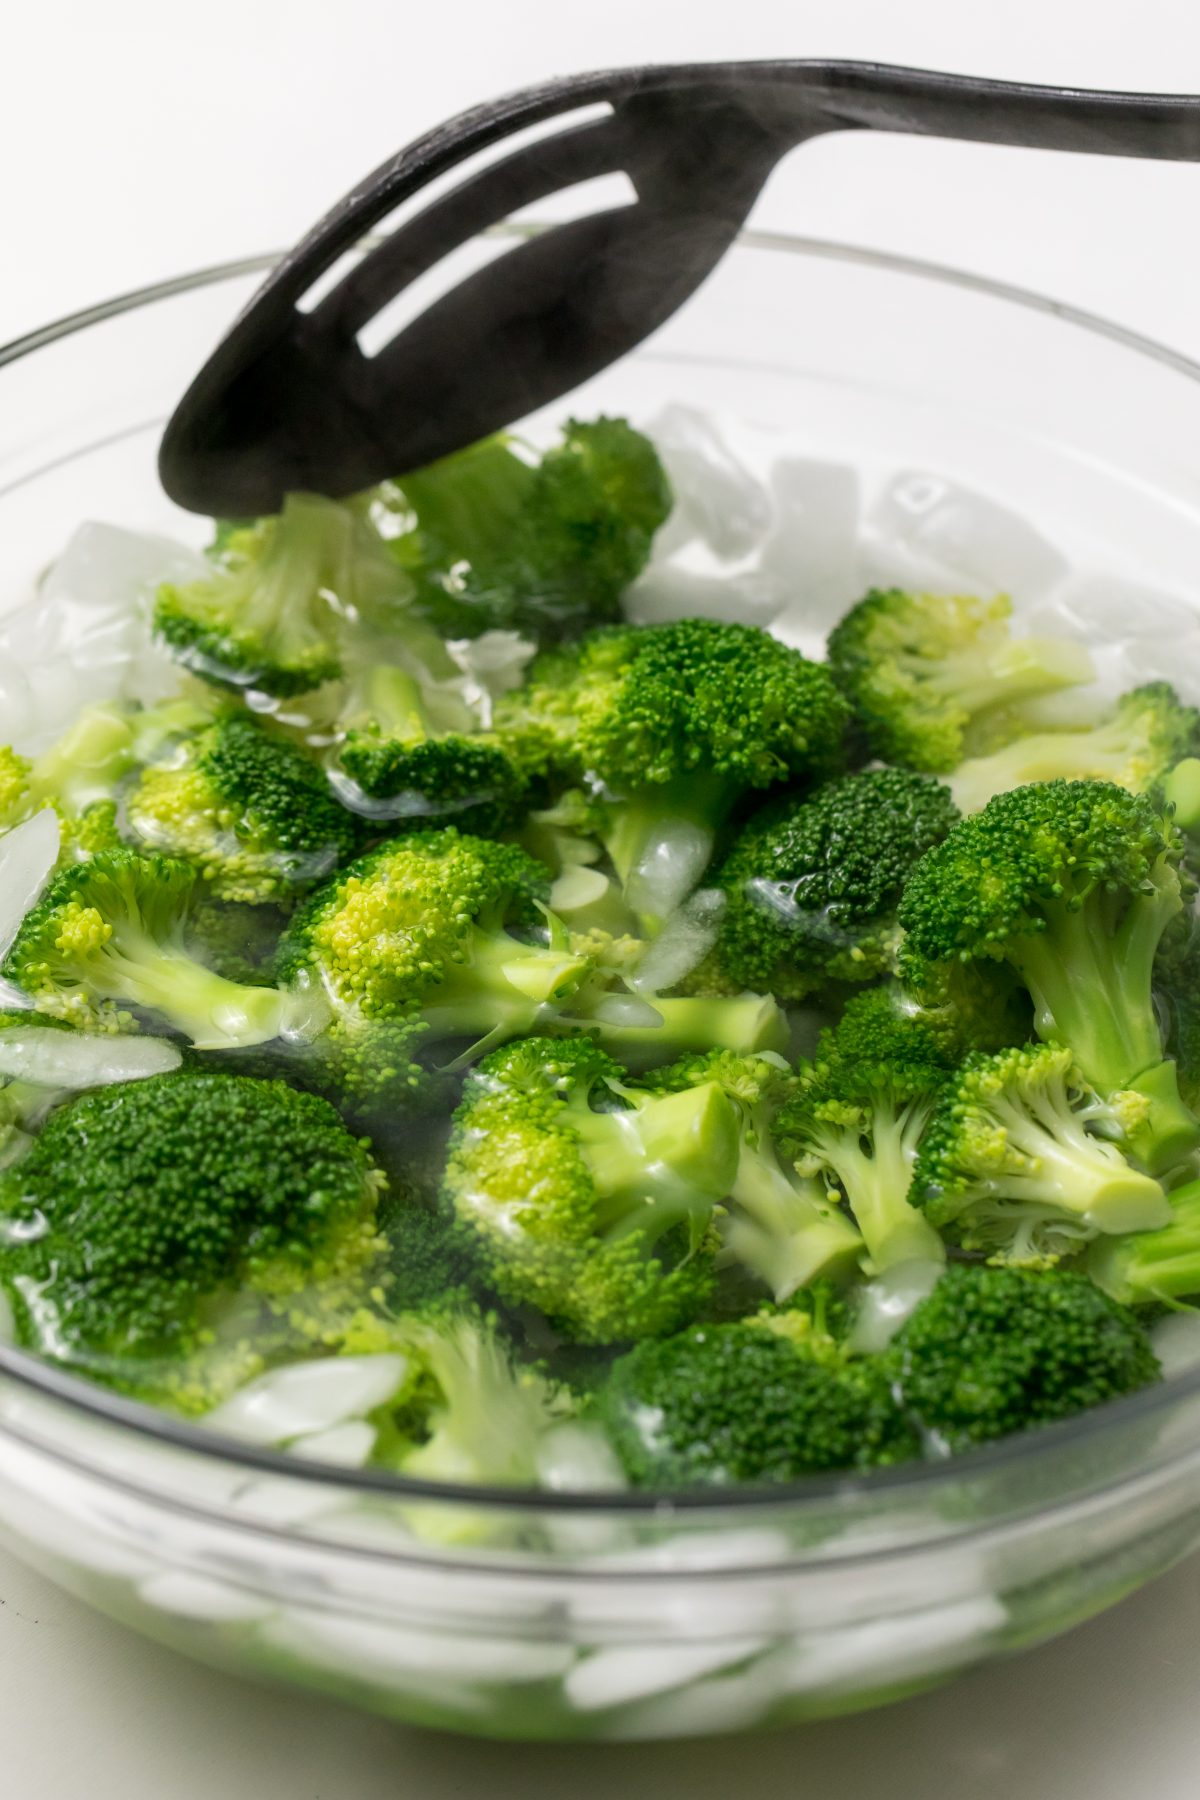 5D4B2470 - Broccoli Salad - Place broccoli florets in ice water bath